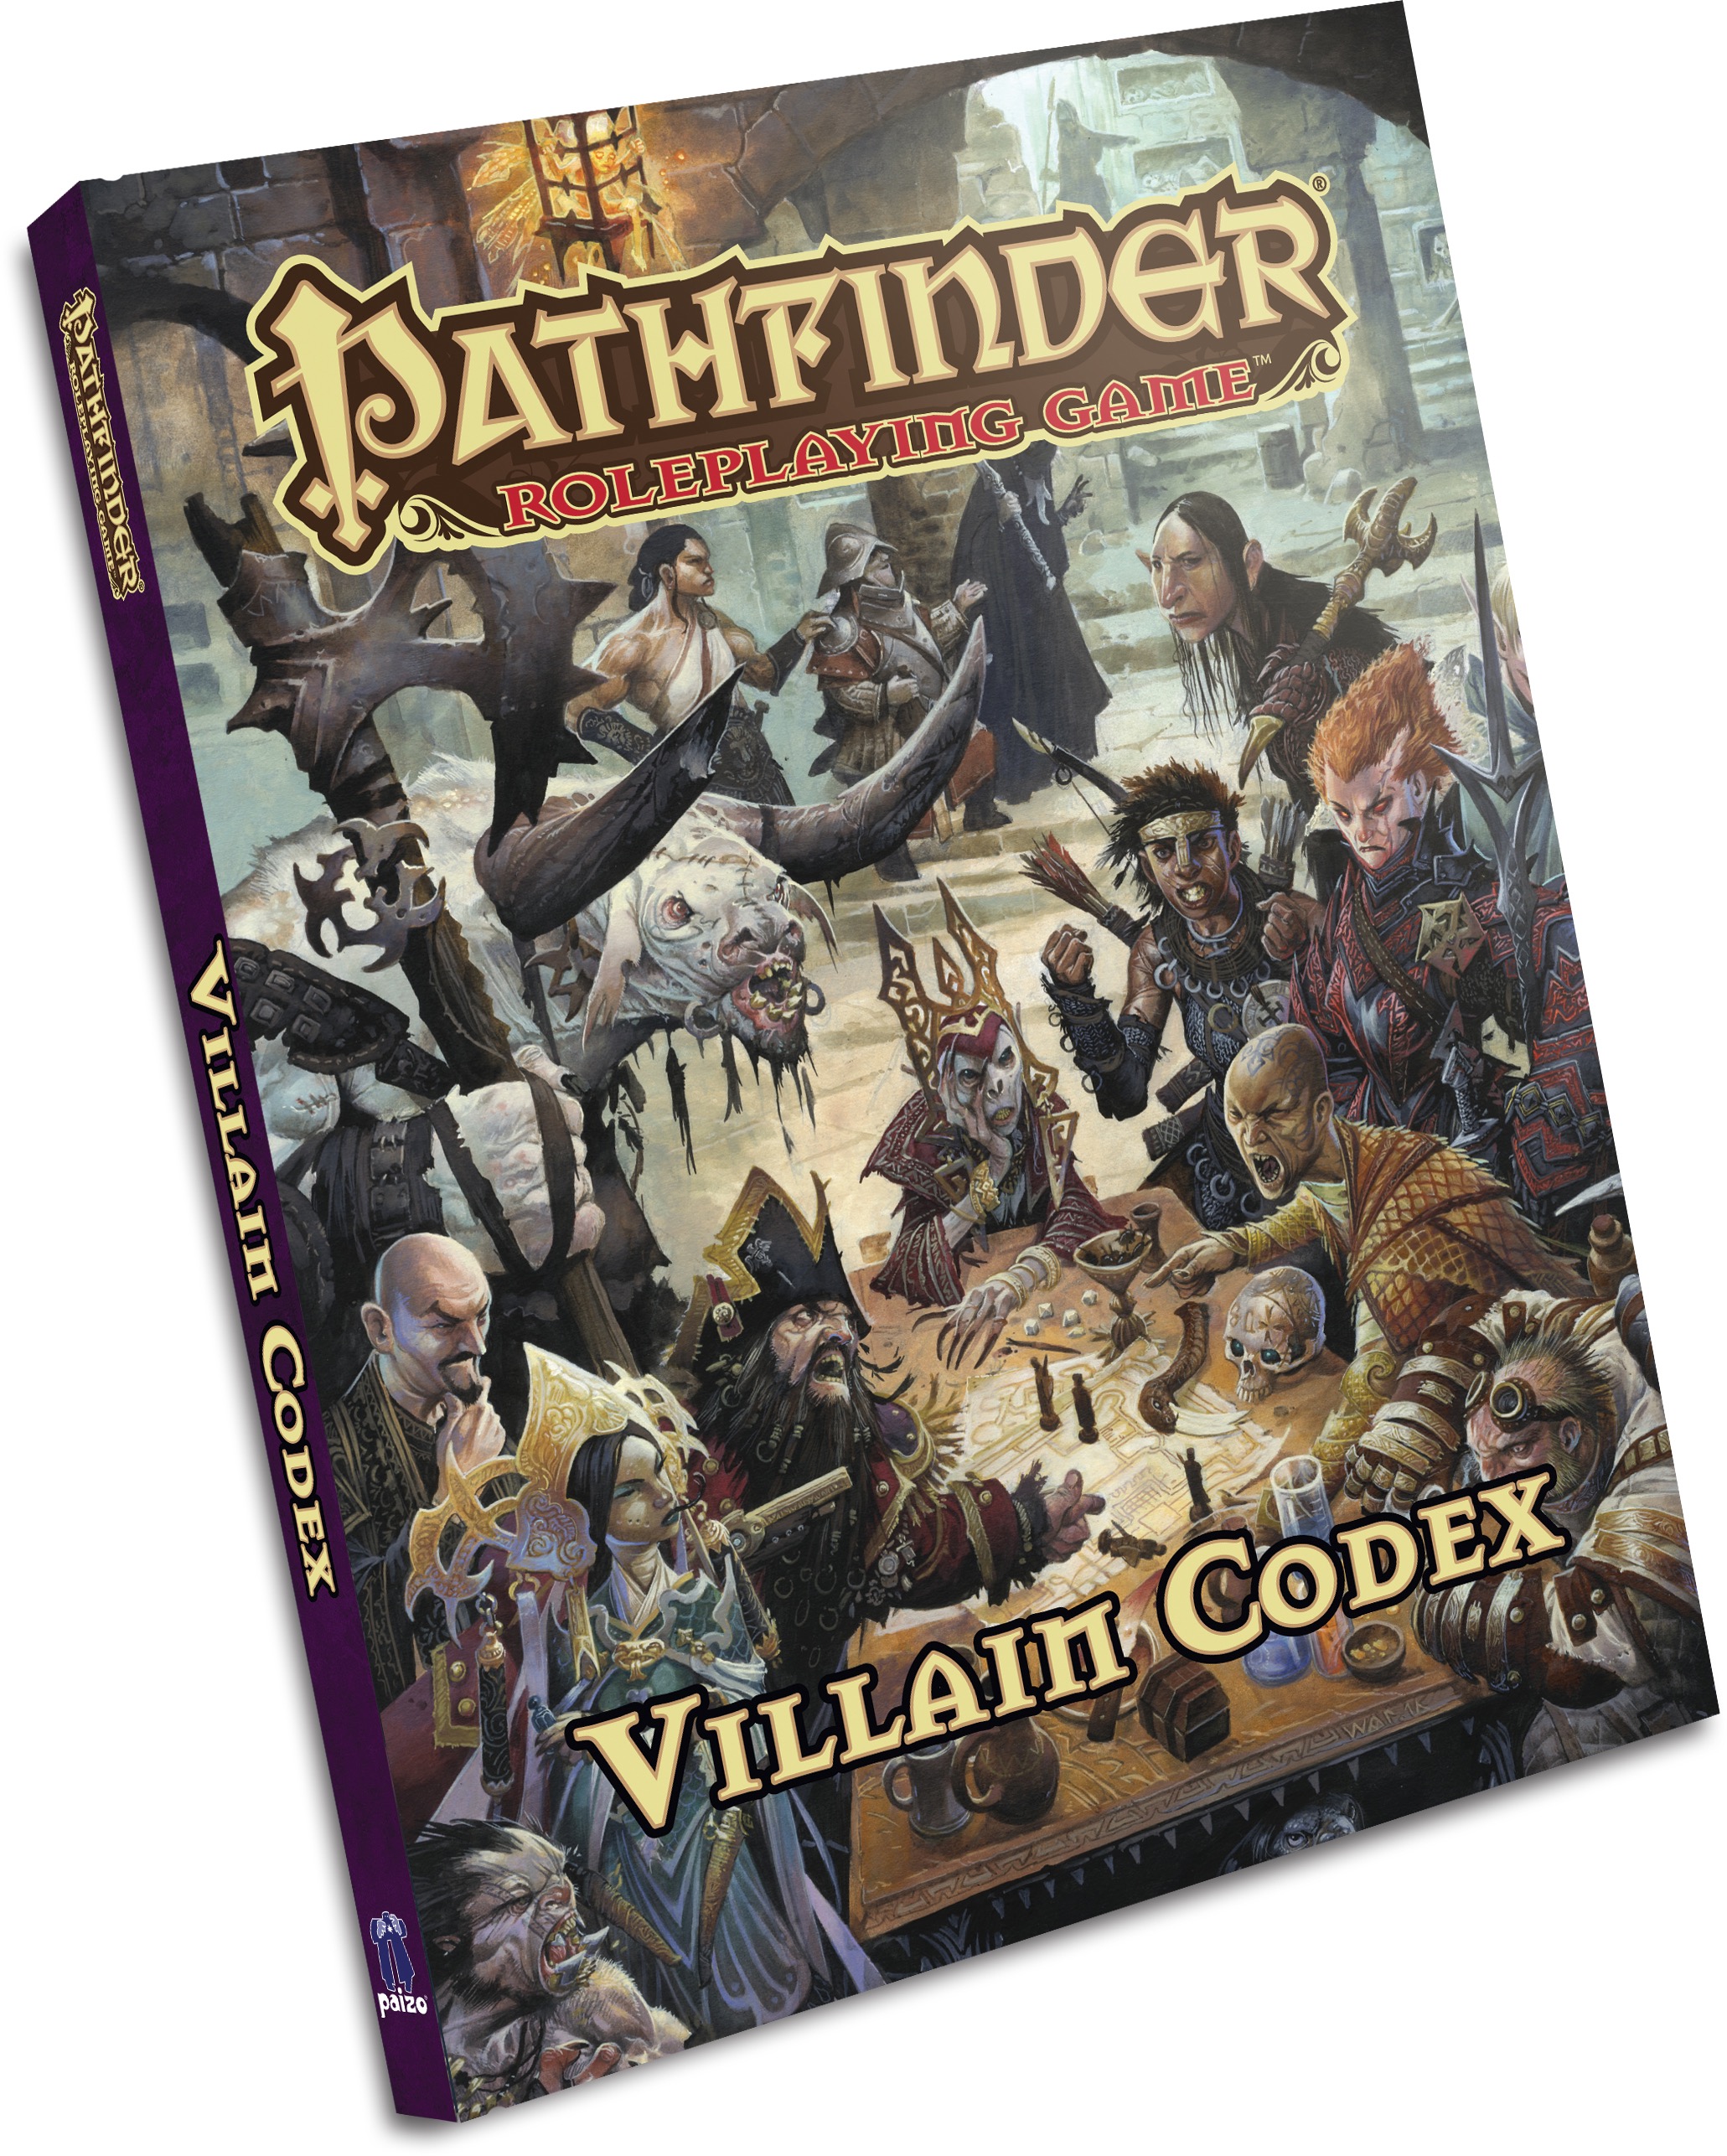 Pathfinder Battles Pawns #176 Heroes & Villains Tokens